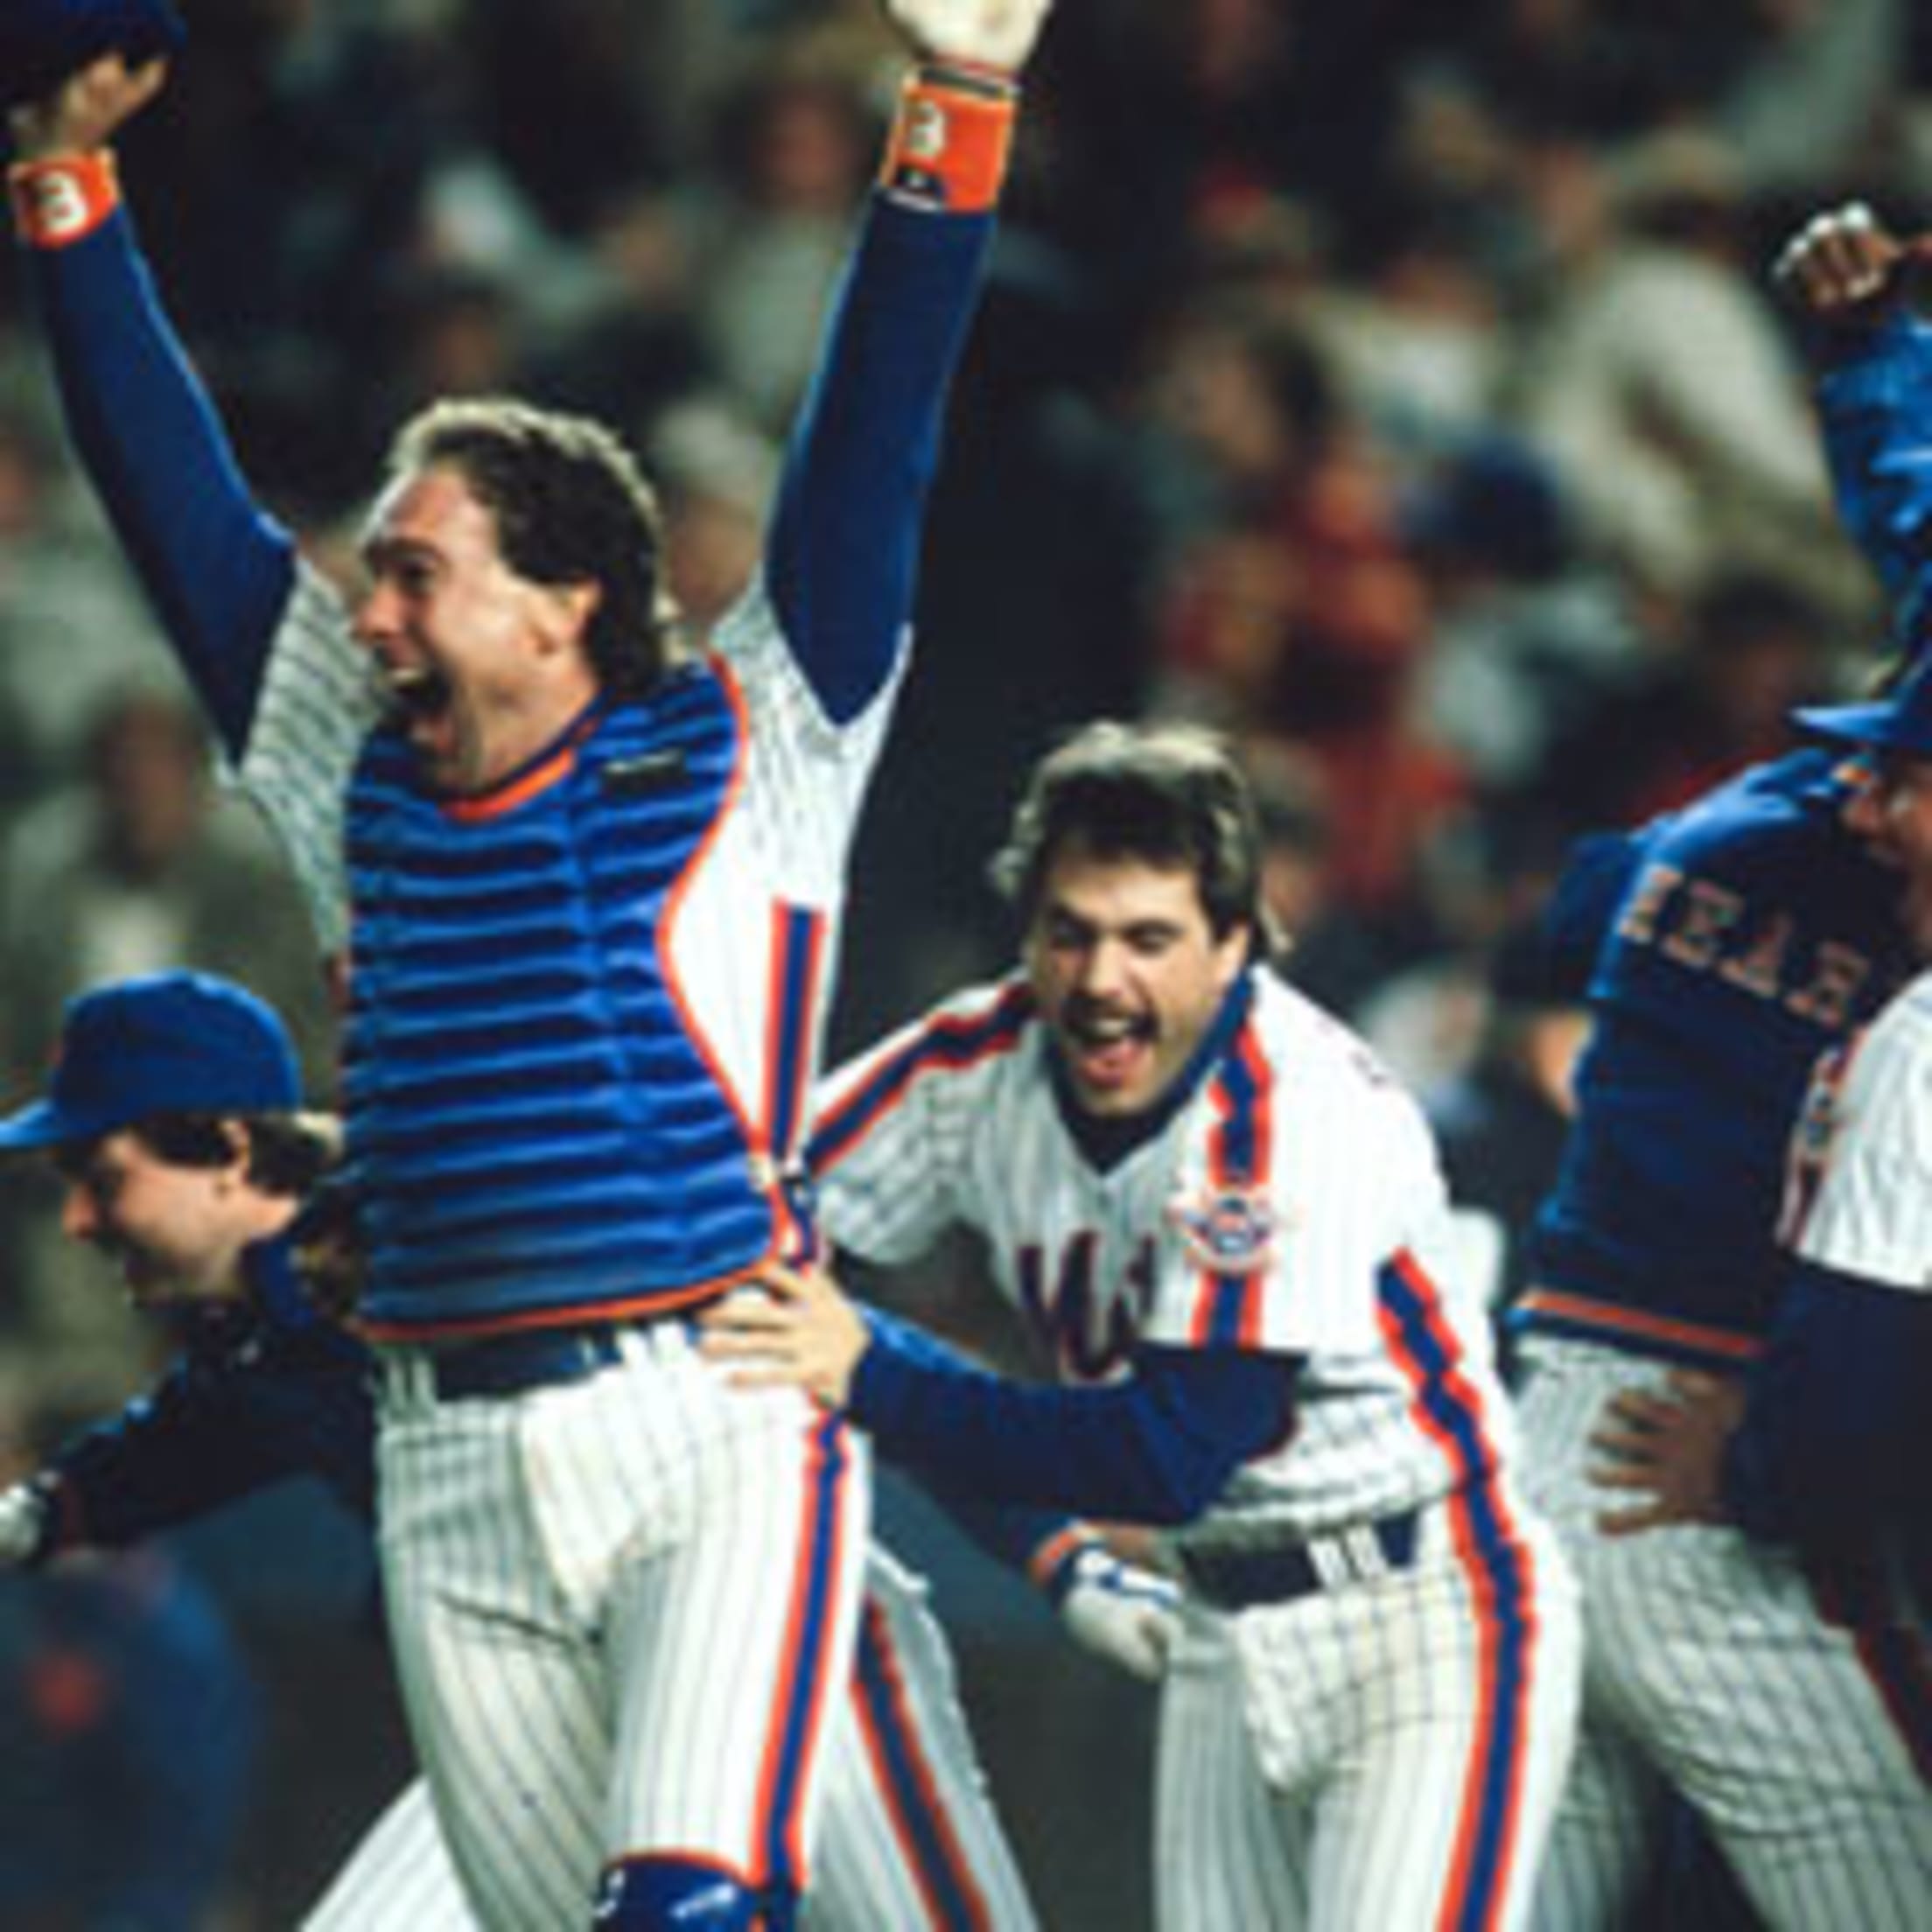 1986 Baseball History - This Great Game